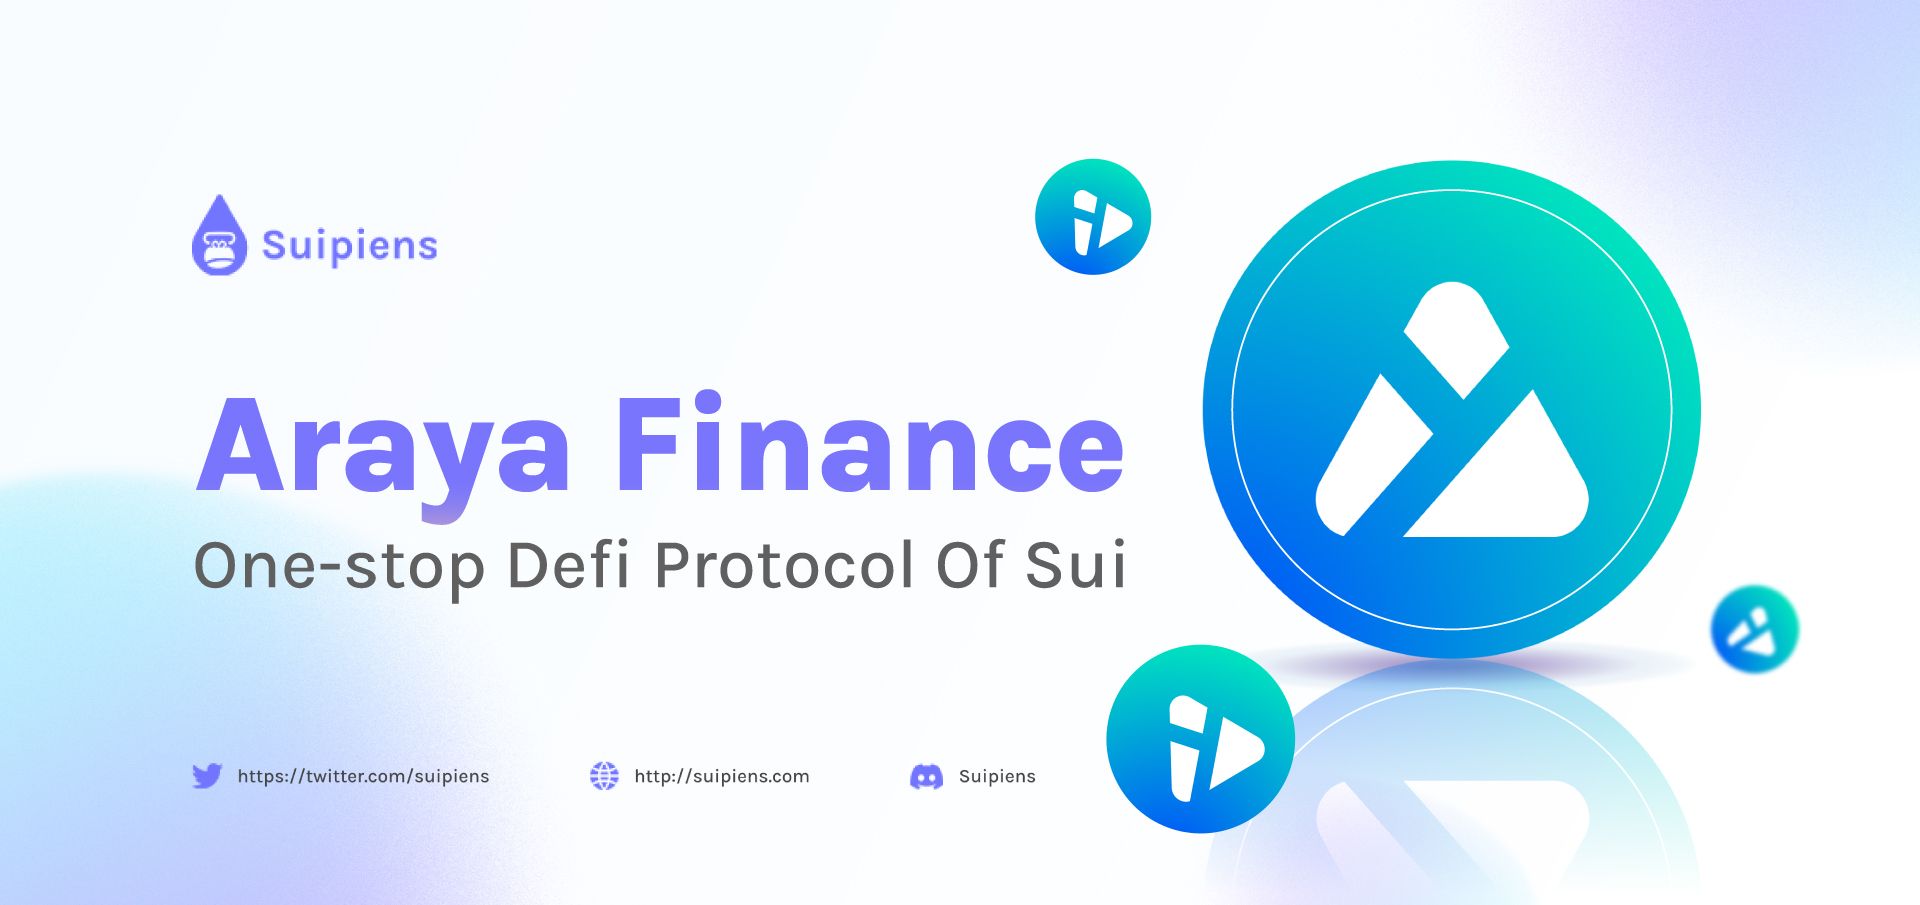 Araya Finance: One-stop Defi Protocol Of Sui